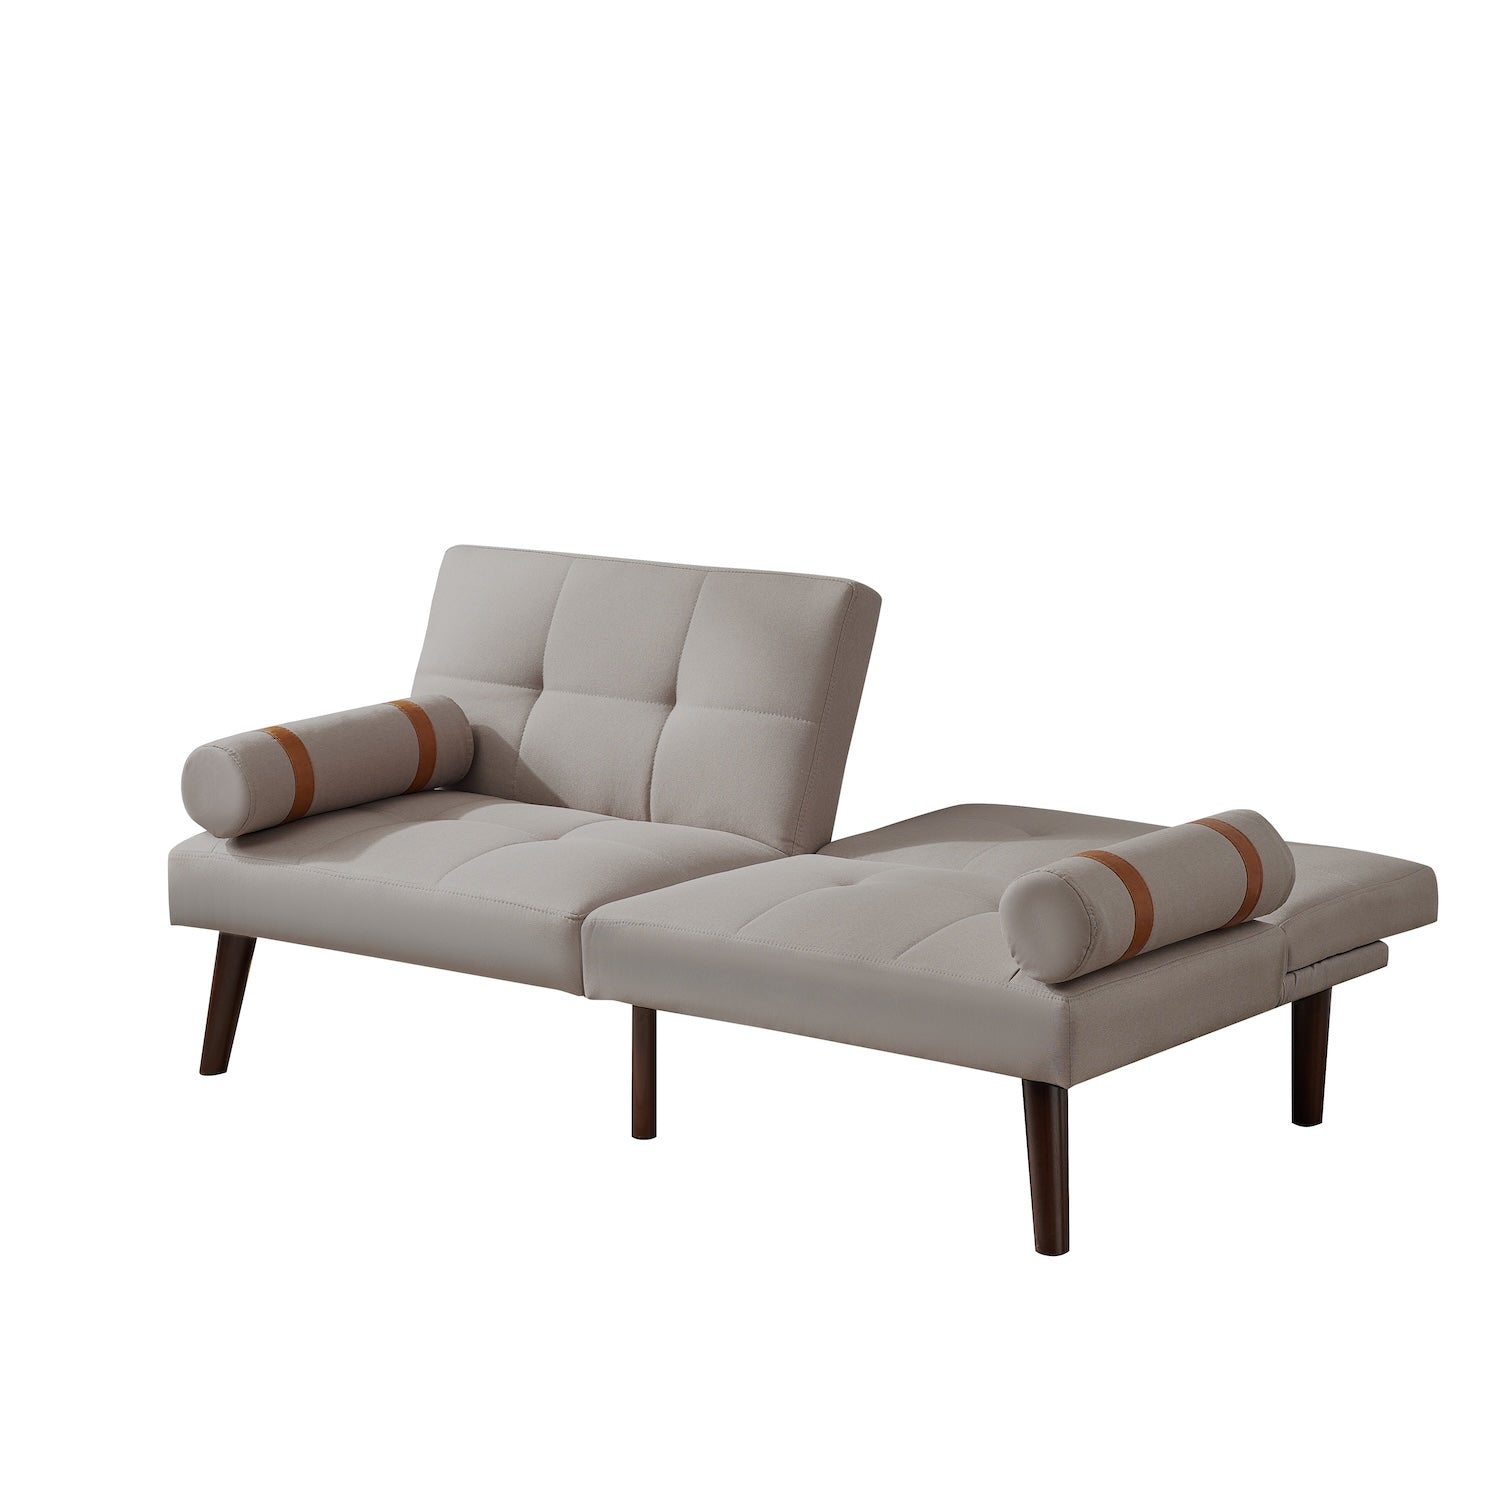 Radiant Split Back Sofa Bed with Walnut Legs - Gray